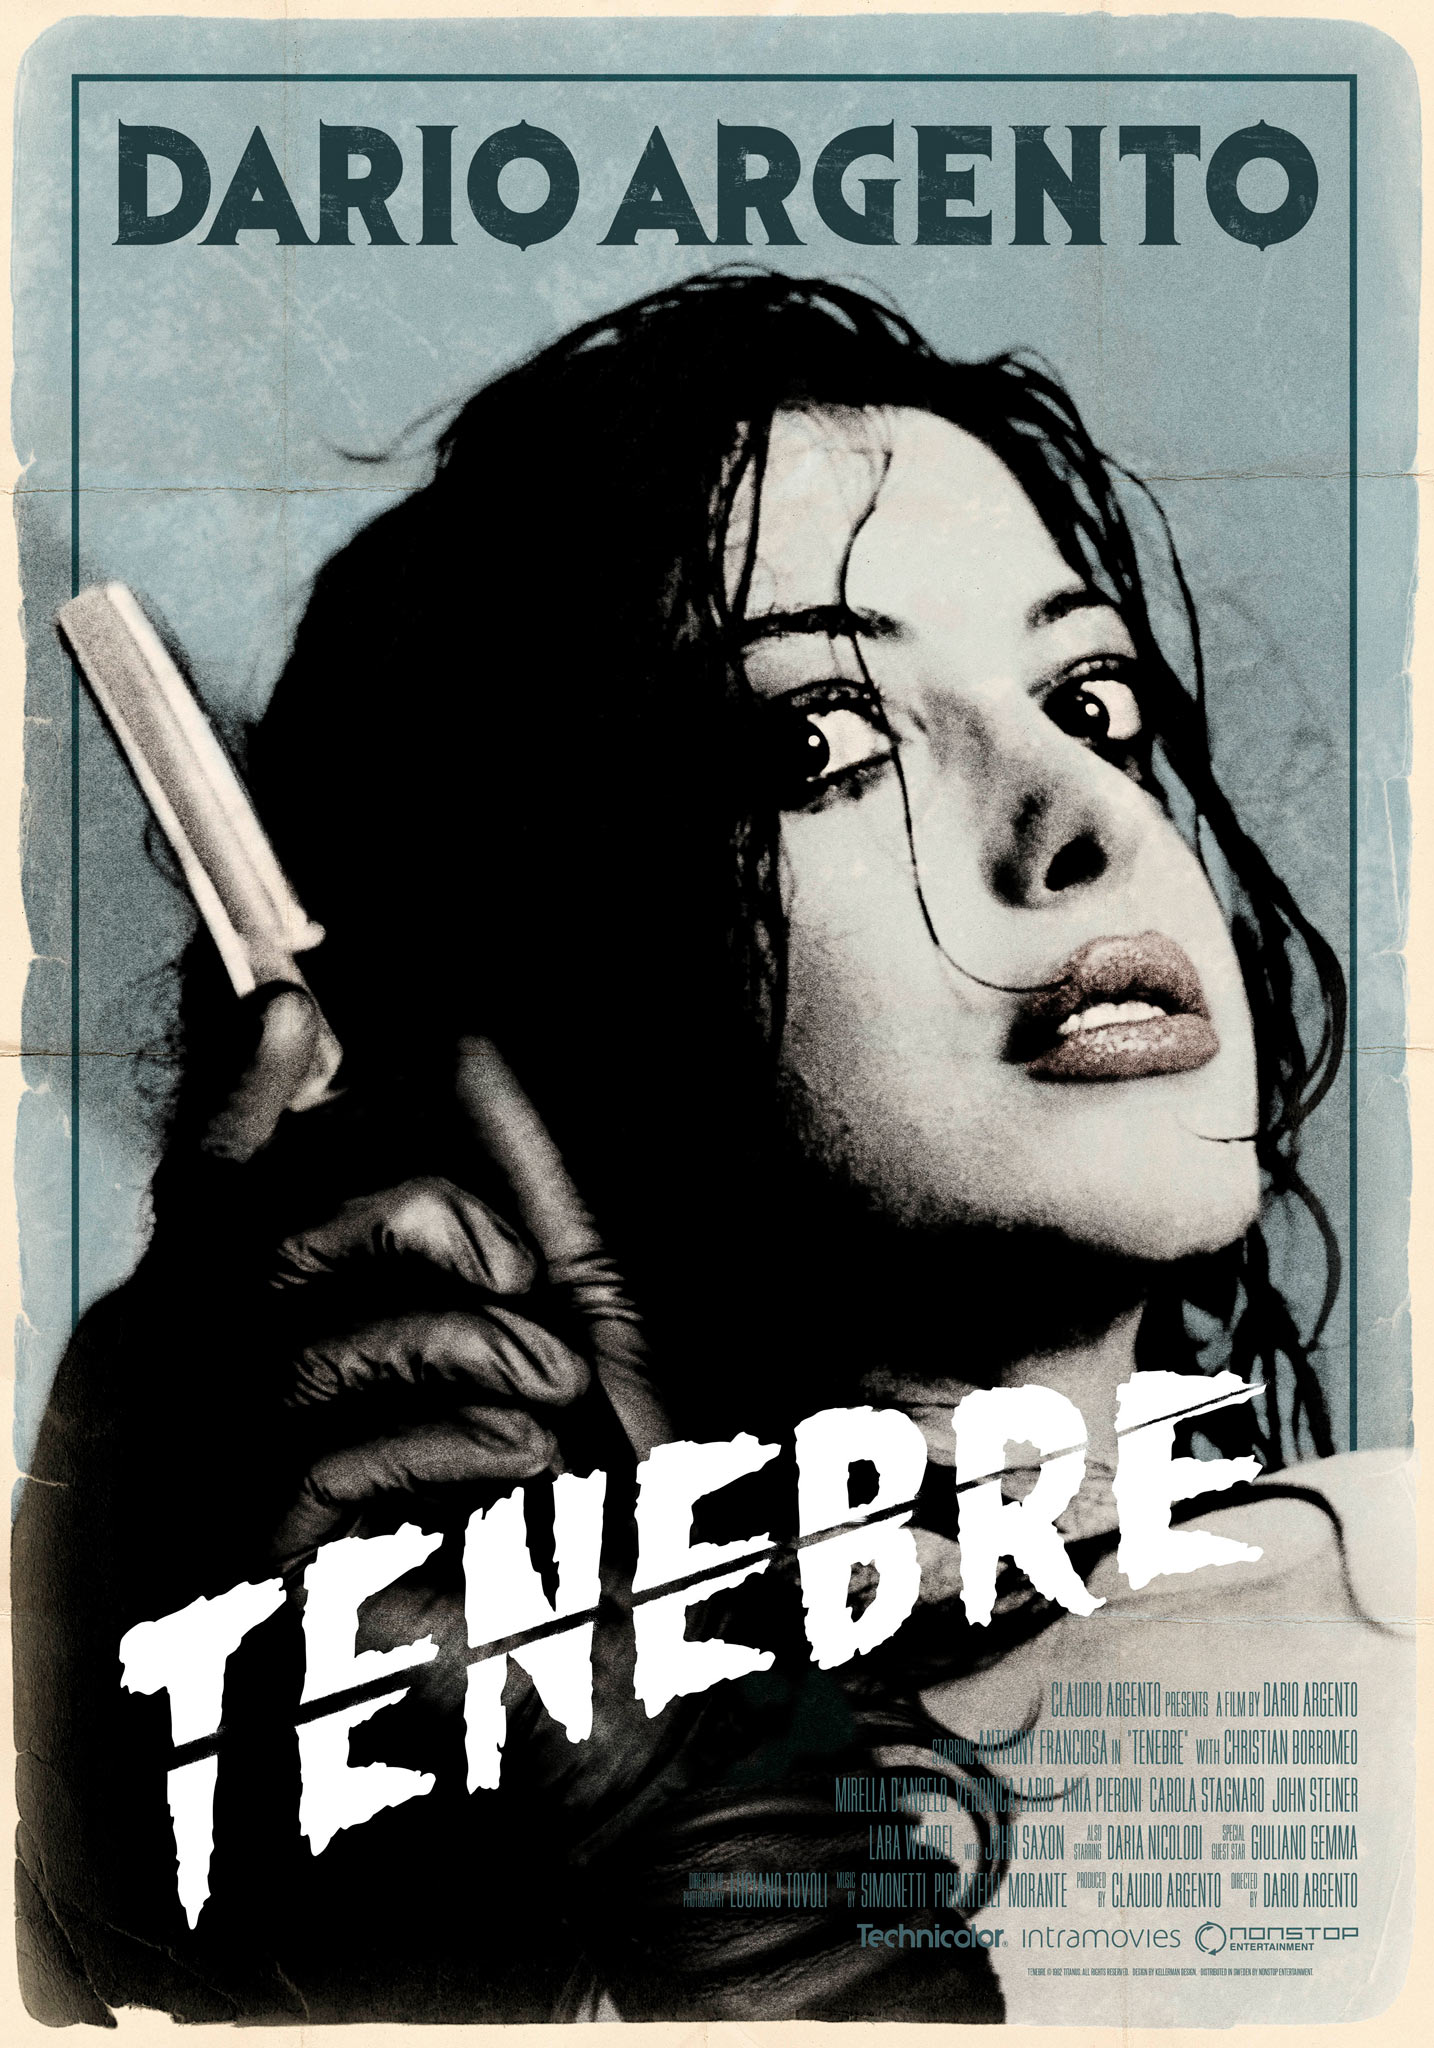 Tenebre (1982) theatrical onesheet